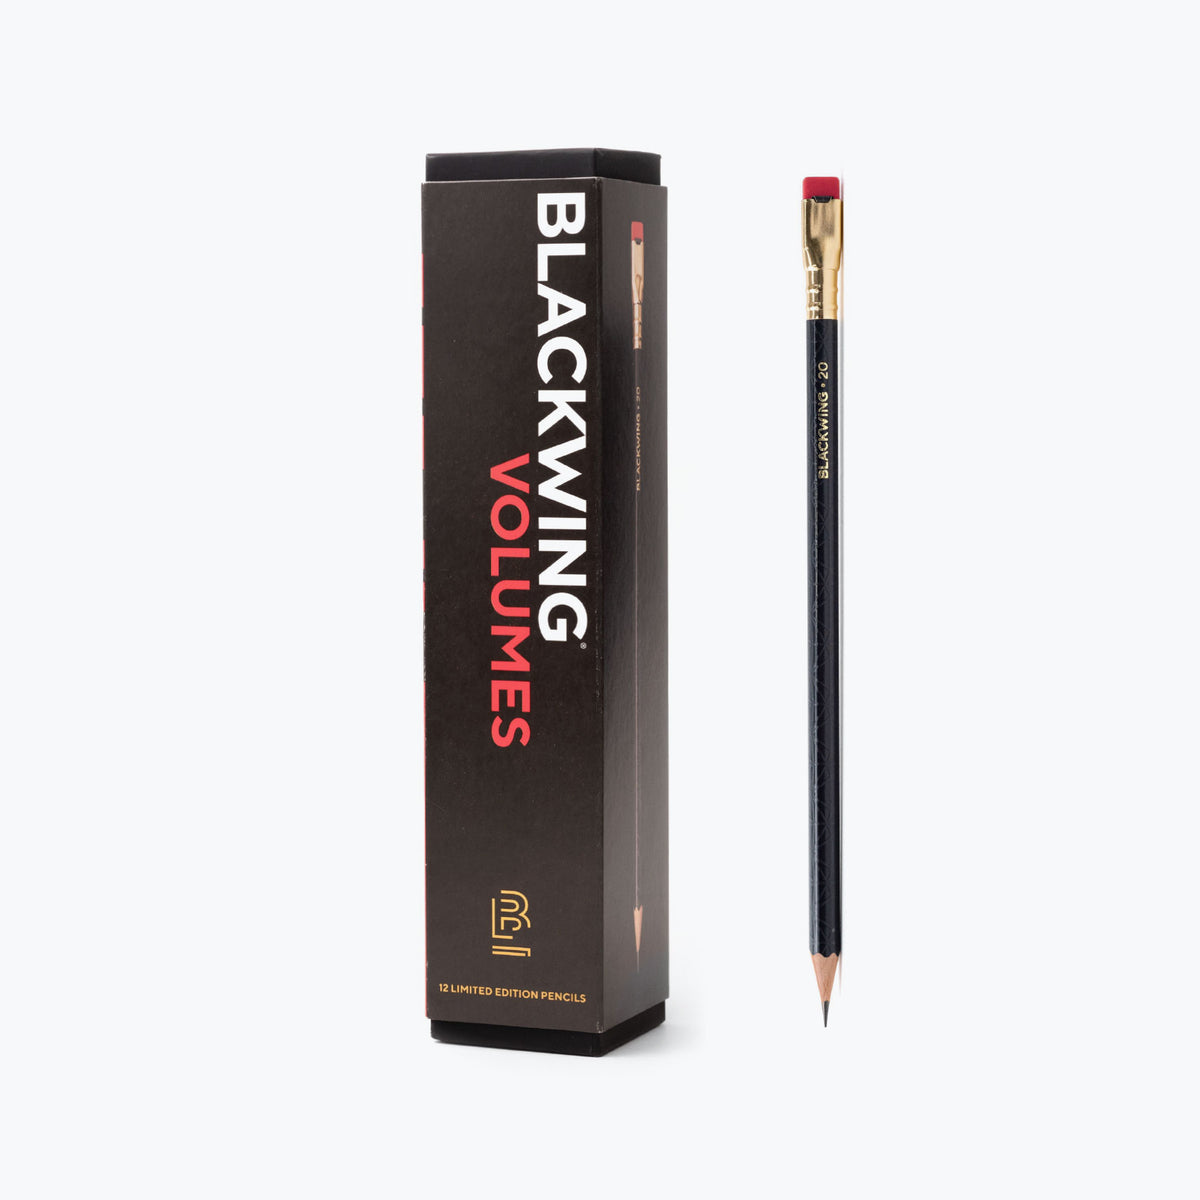 Blackwing - Pencil - Volume 20 - Box of 12